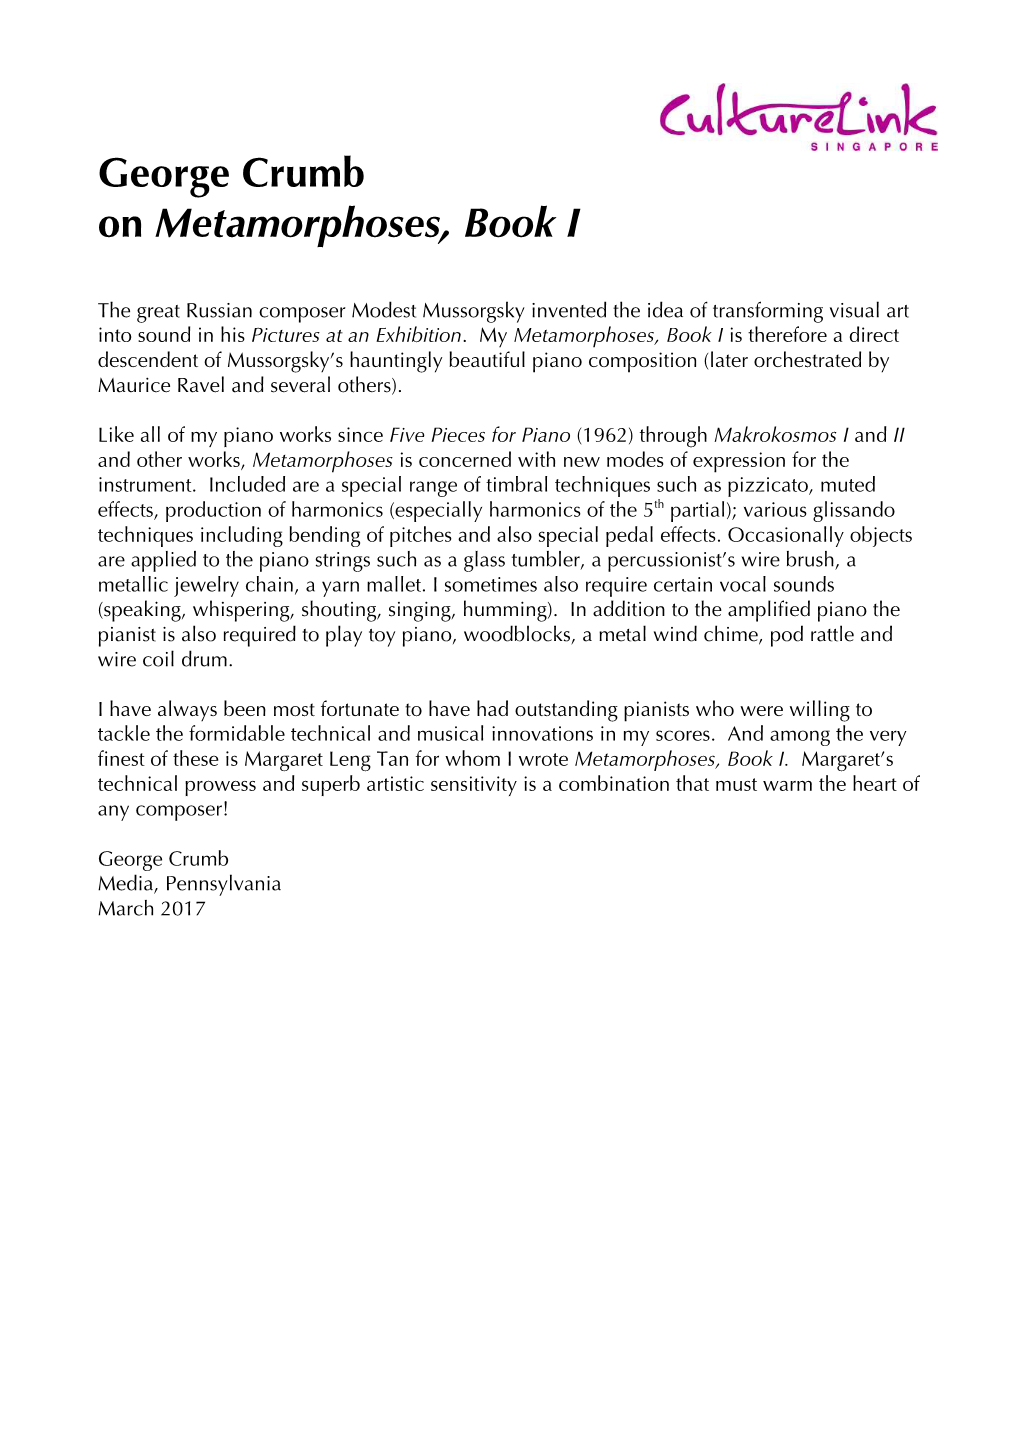 George Crumb on Metamorphoses, Book I